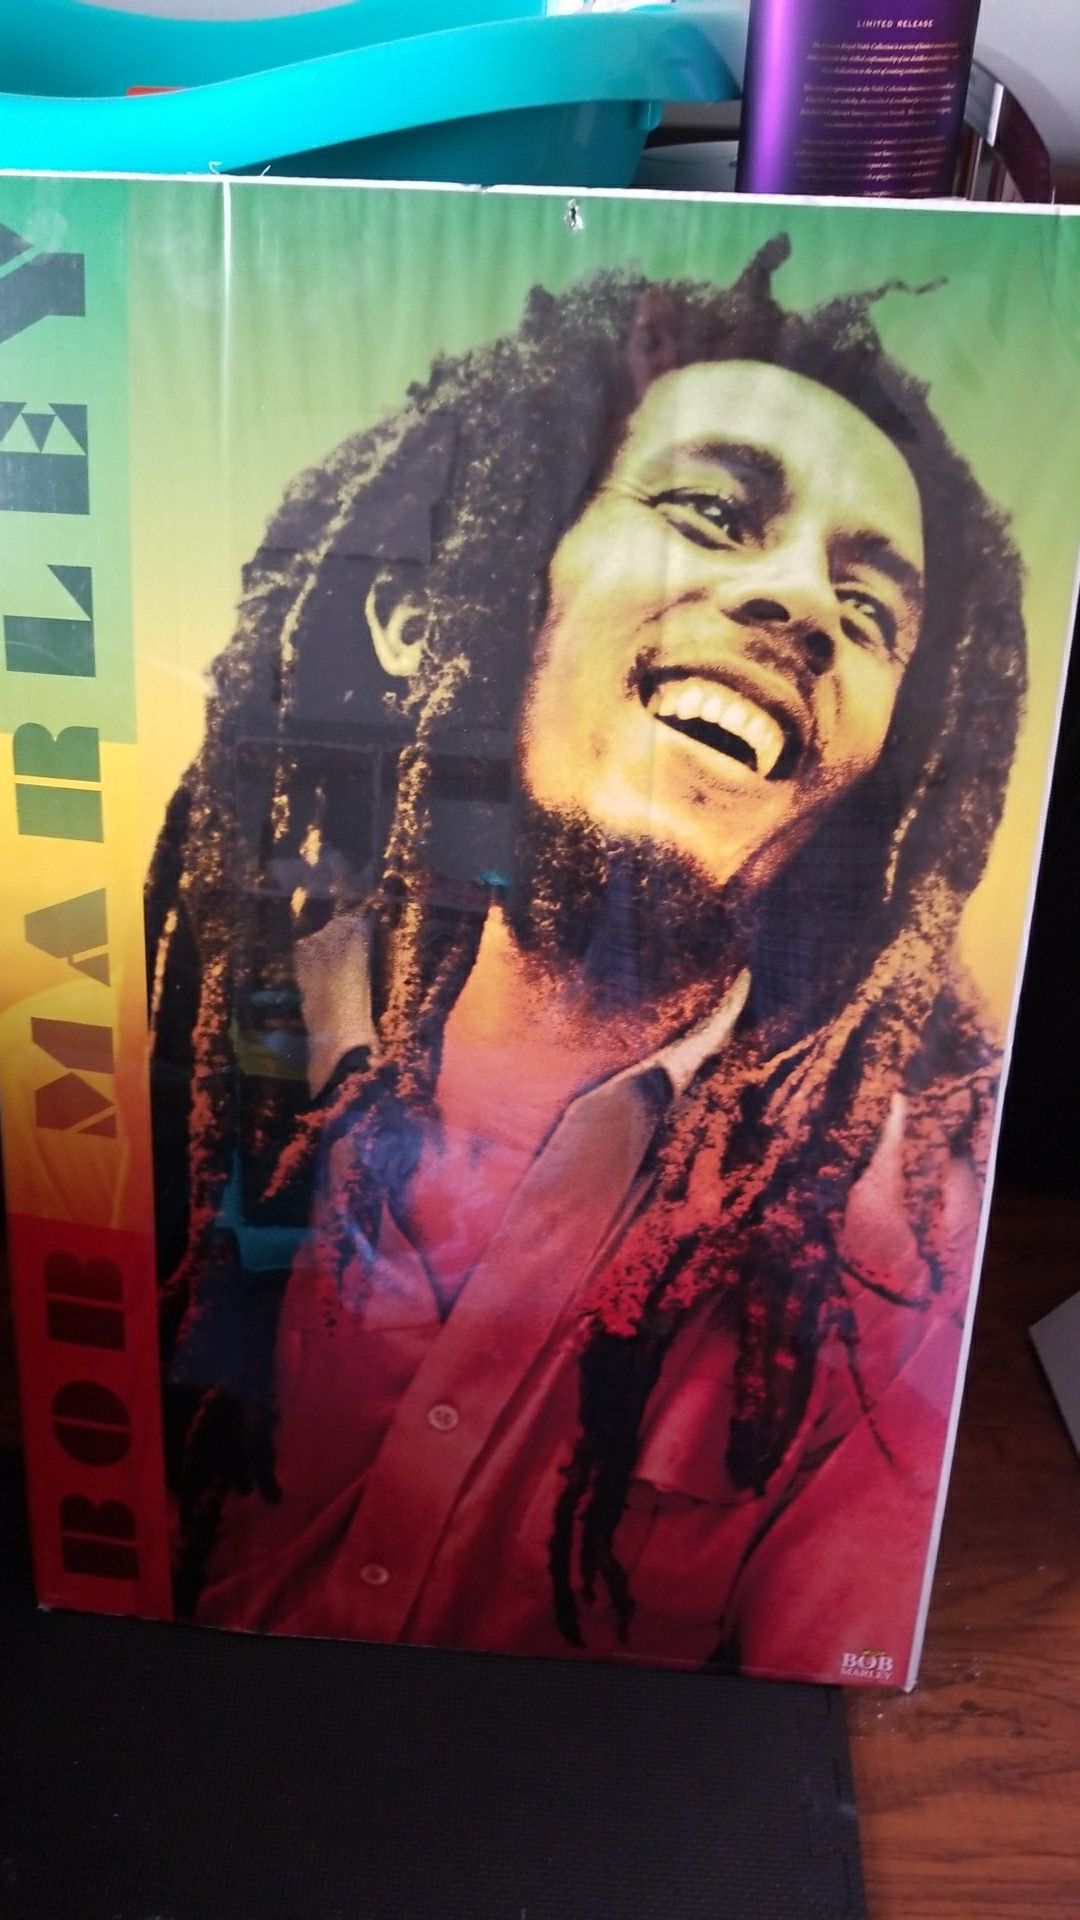 Large bob Marley cardboard poster